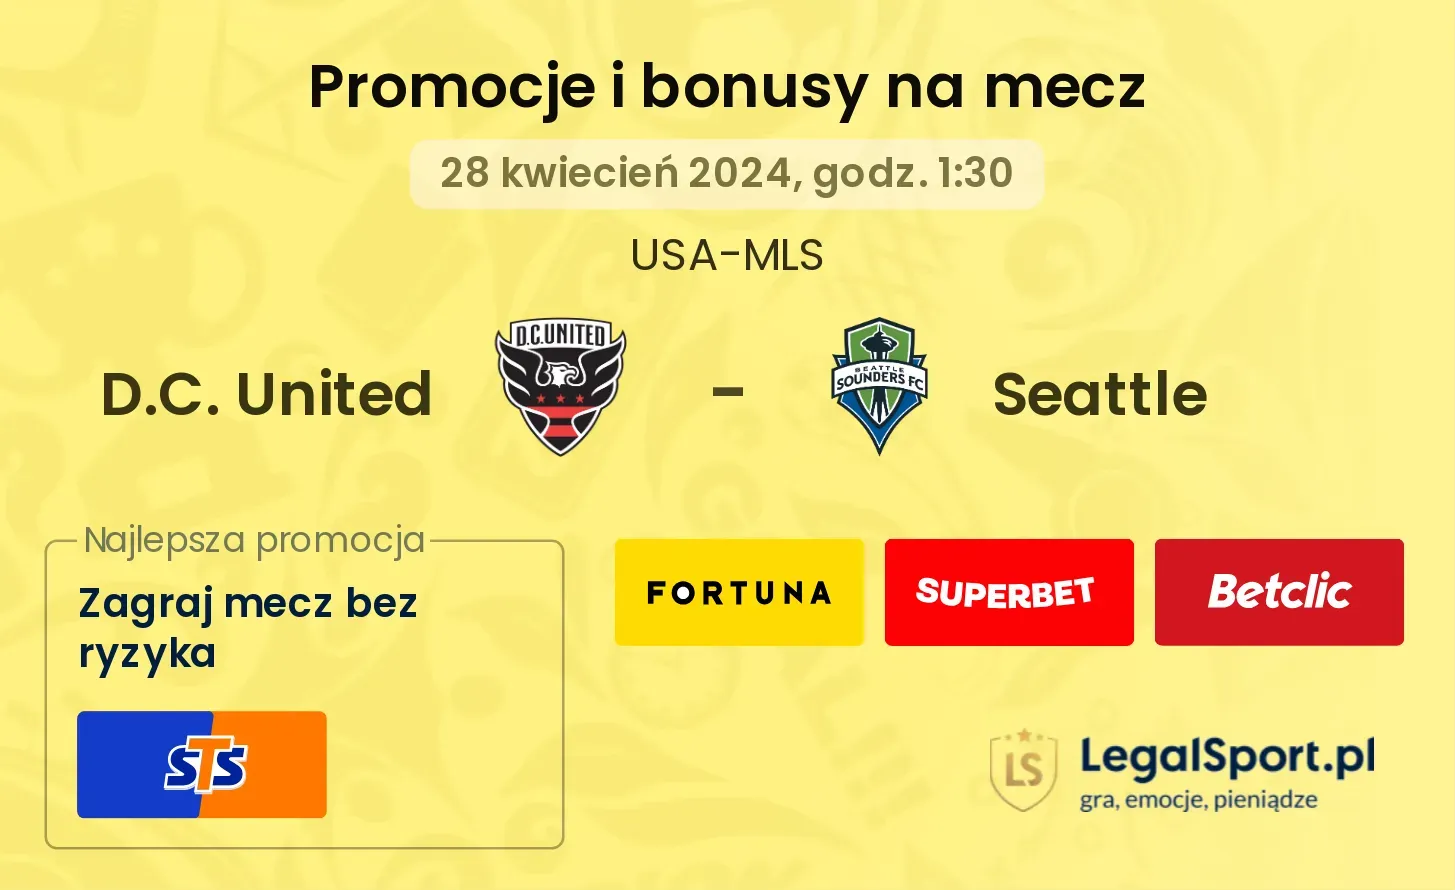 D.C. United - Seattle promocje bonusy na mecz